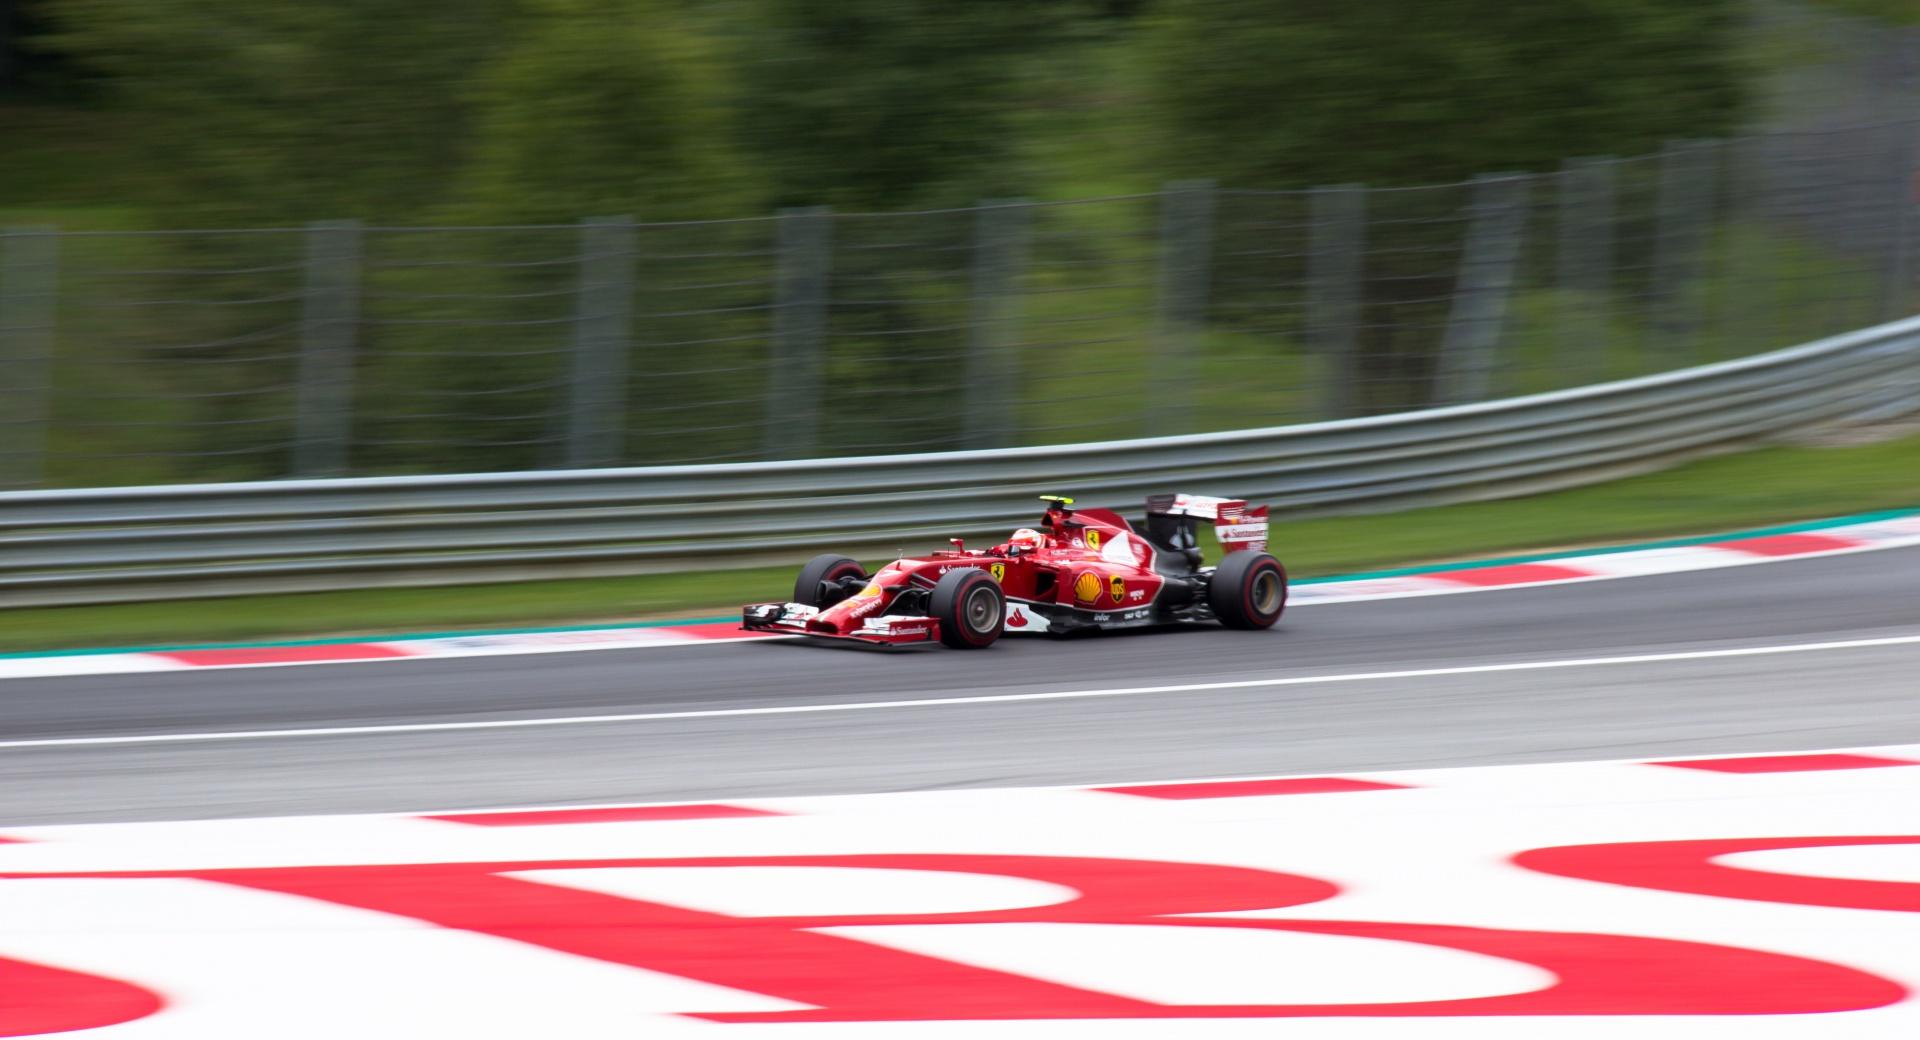 Grand Prix Austria - Red Bull - F1 - 2014 at 1280 x 960 size wallpapers HD quality